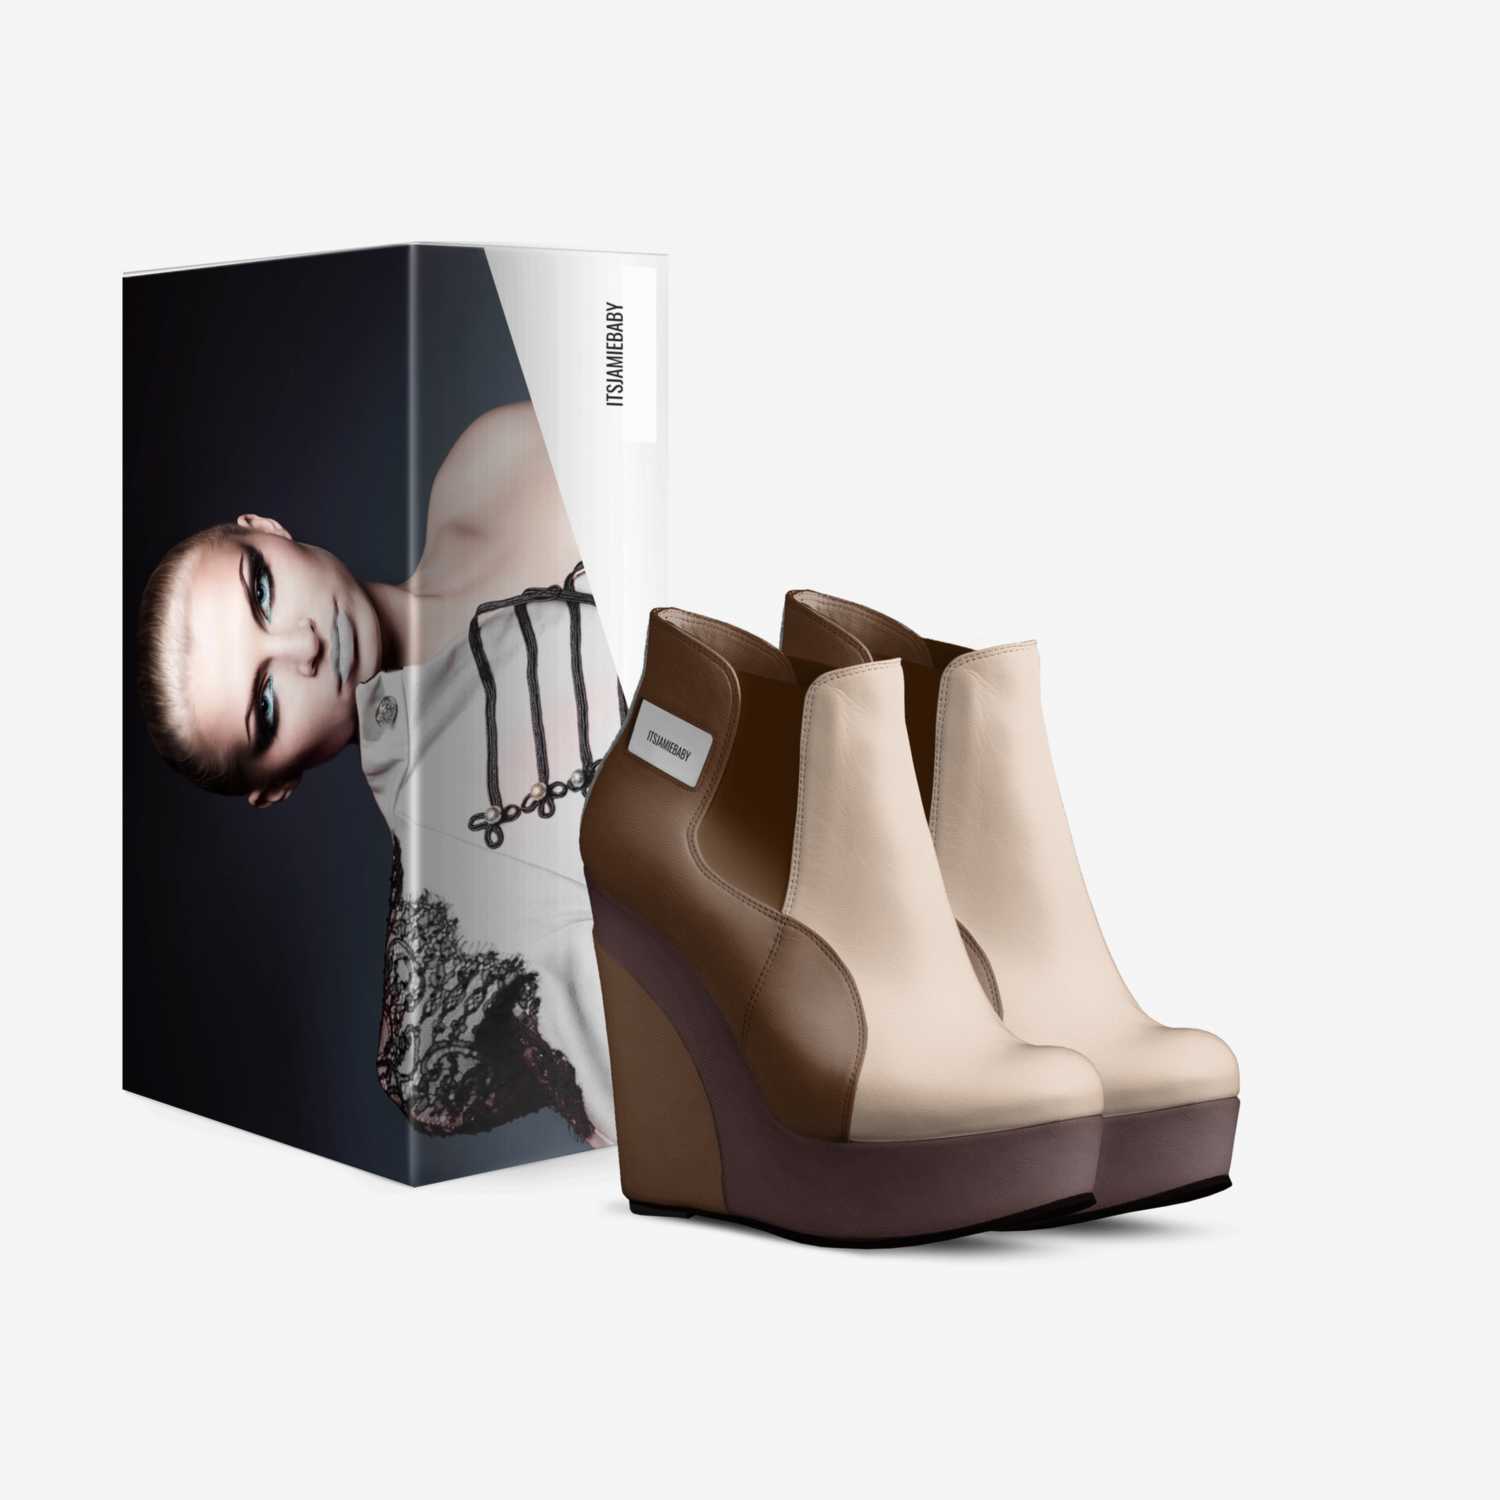 ITSJAMIEBABY custom made in Italy shoes by Jamie Wilkinson | Box view